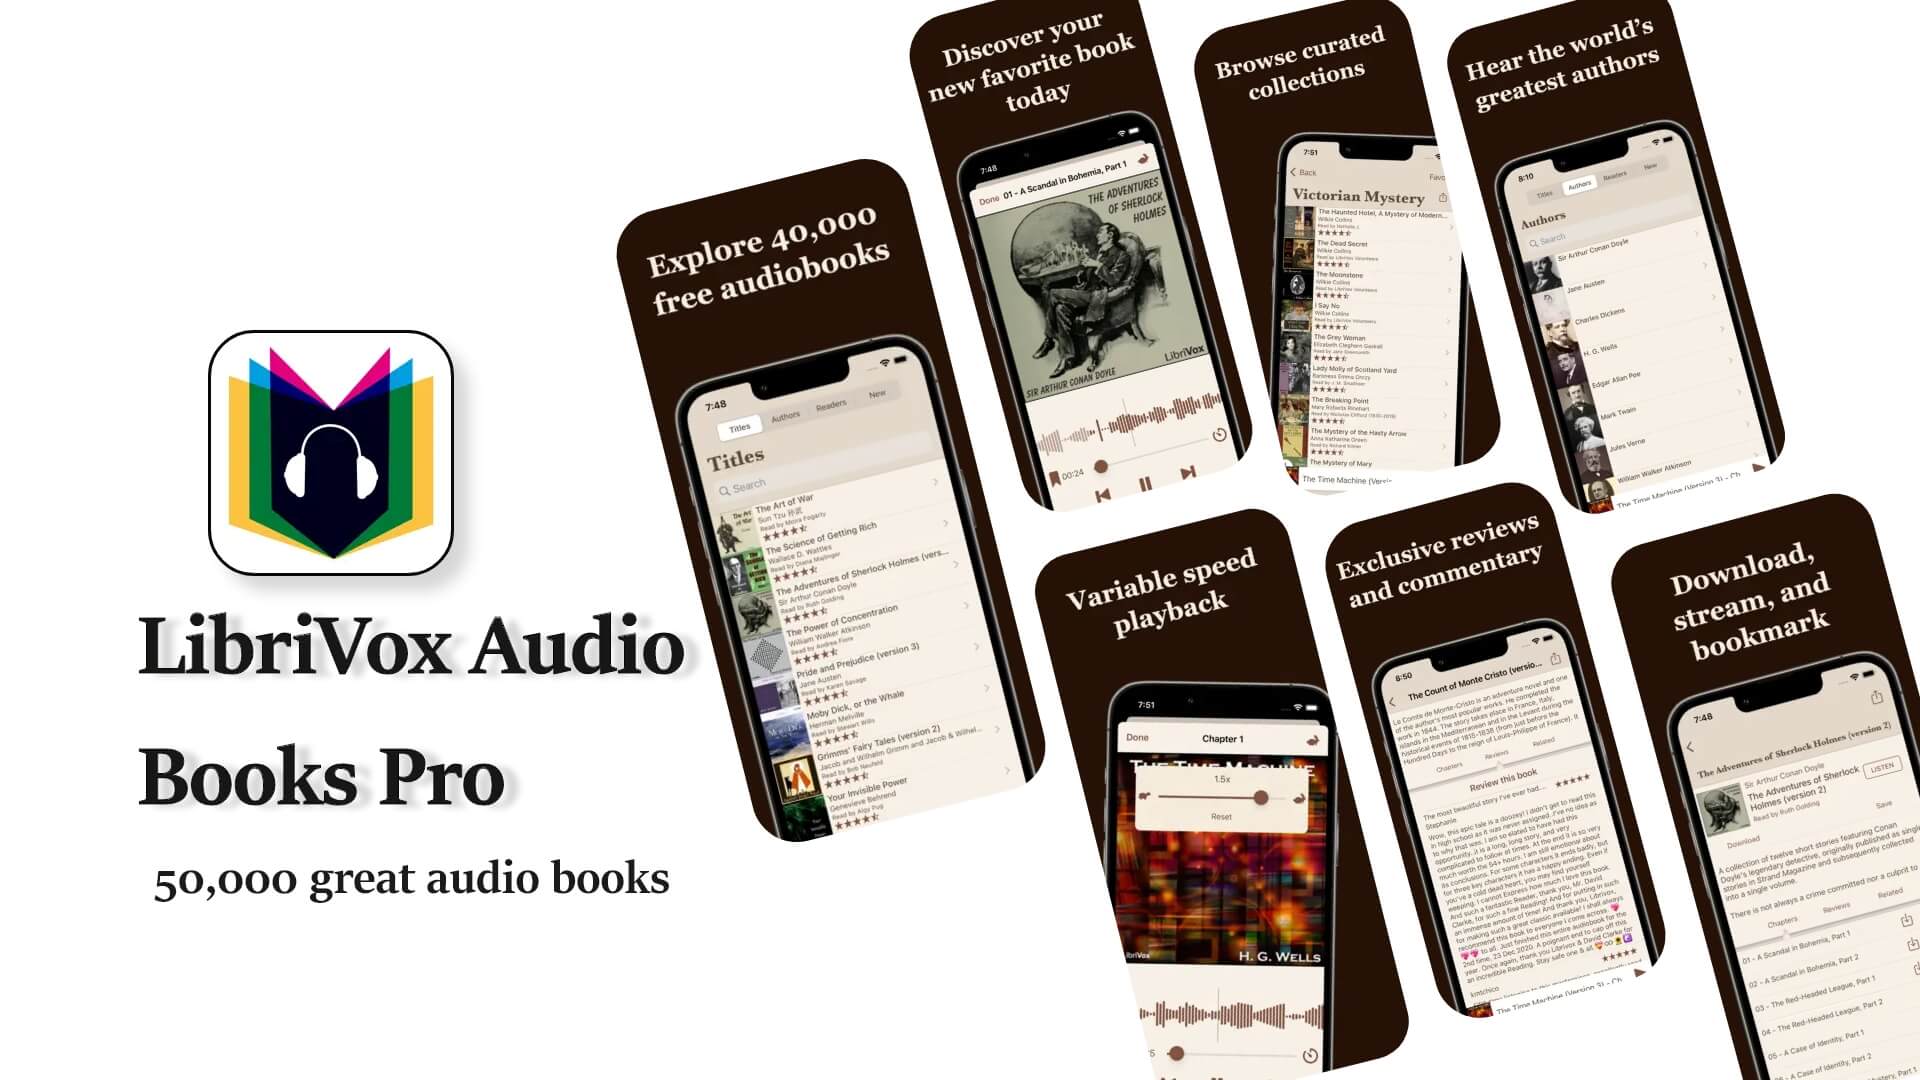 LibriVox Audio Books Pro